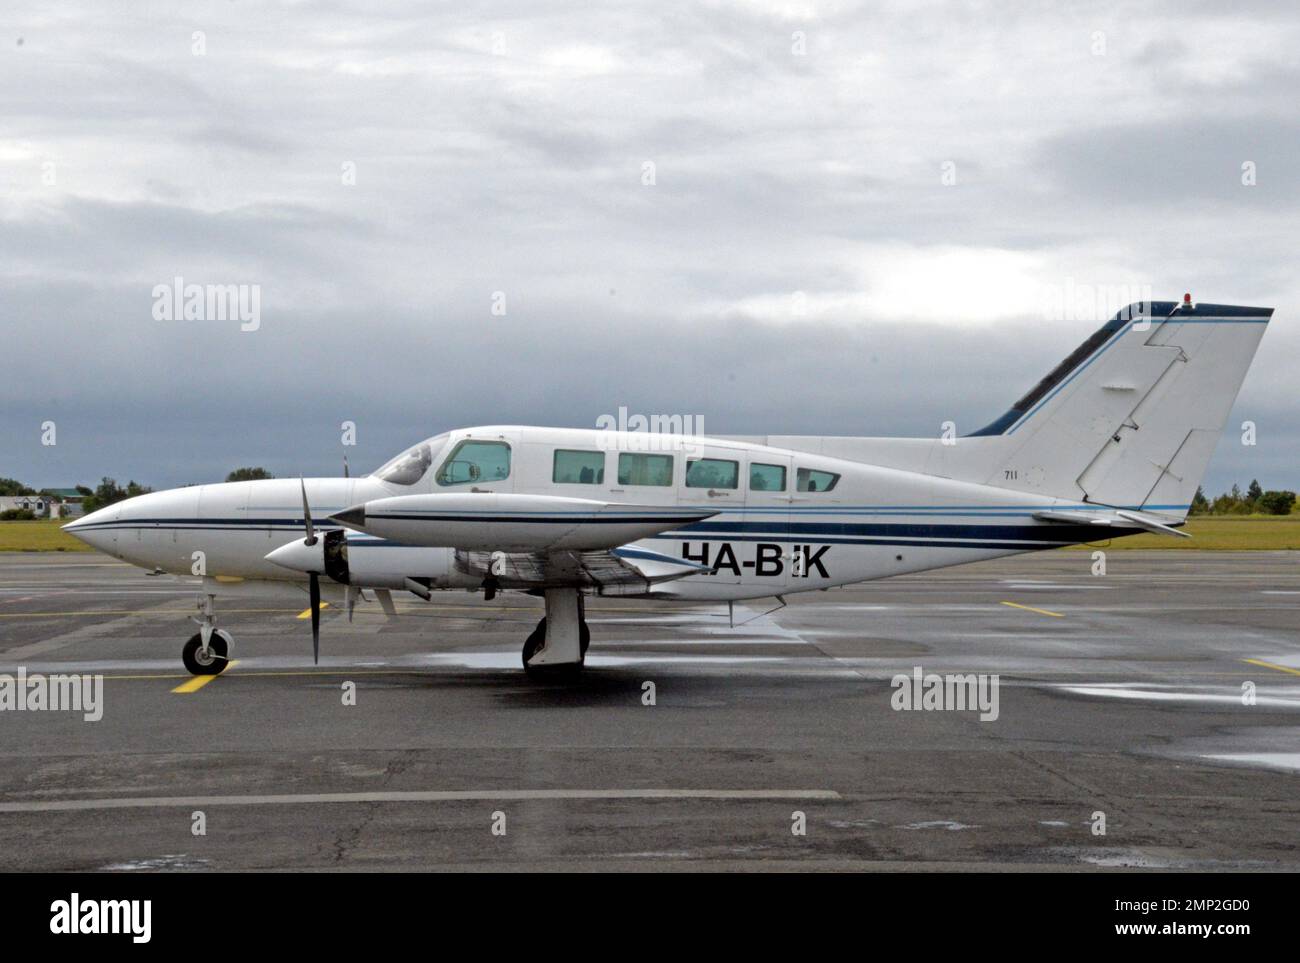 Iceland, Reykjavik:   HA-BIK   Cessna  402  at Reykjavik airport. Stock Photo